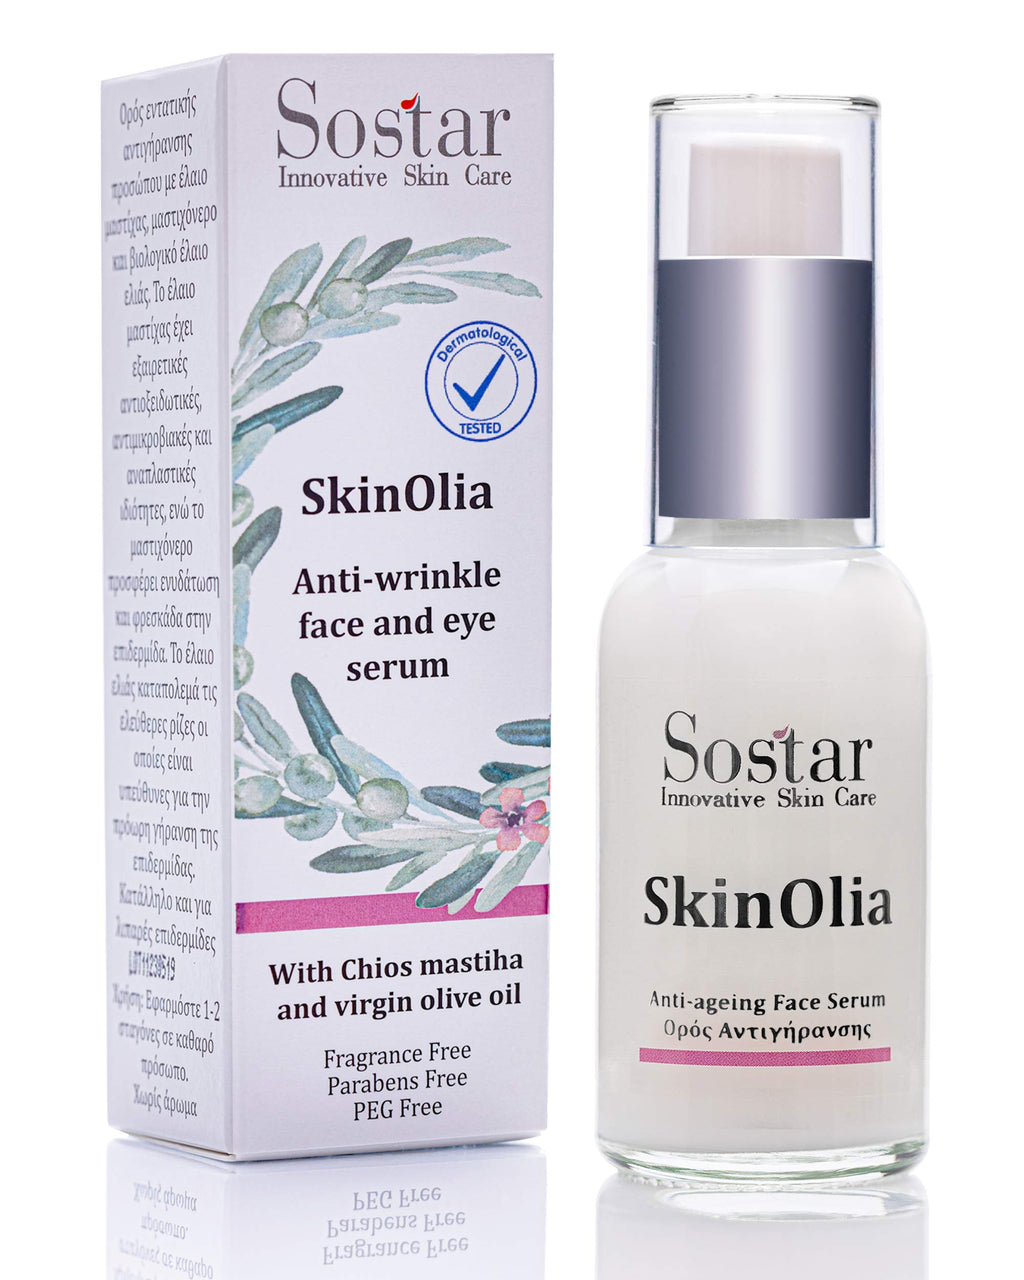 [Australia] - Sostar Face & Eye Serum - Anti-Wrinkle Serum with Greek Organic Mastic & Olive Oil - Powerful Natural Antioxidants - Suitable for Mature All Skin Types 